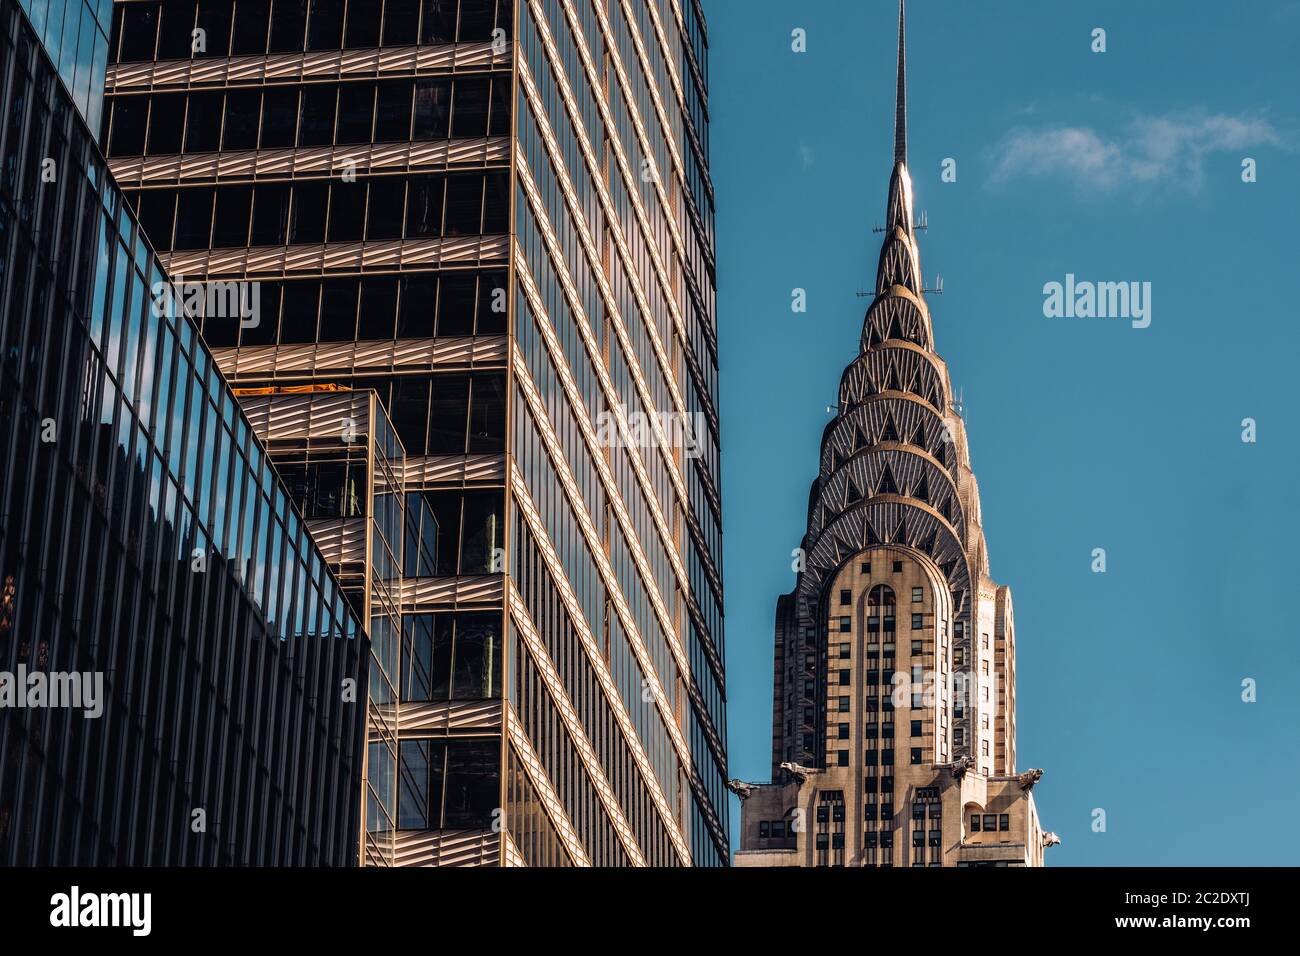 Close-up view of Chrysler Building and One Vanderbilt skyscraper in Midtown Manhattan New York City Stock Photo